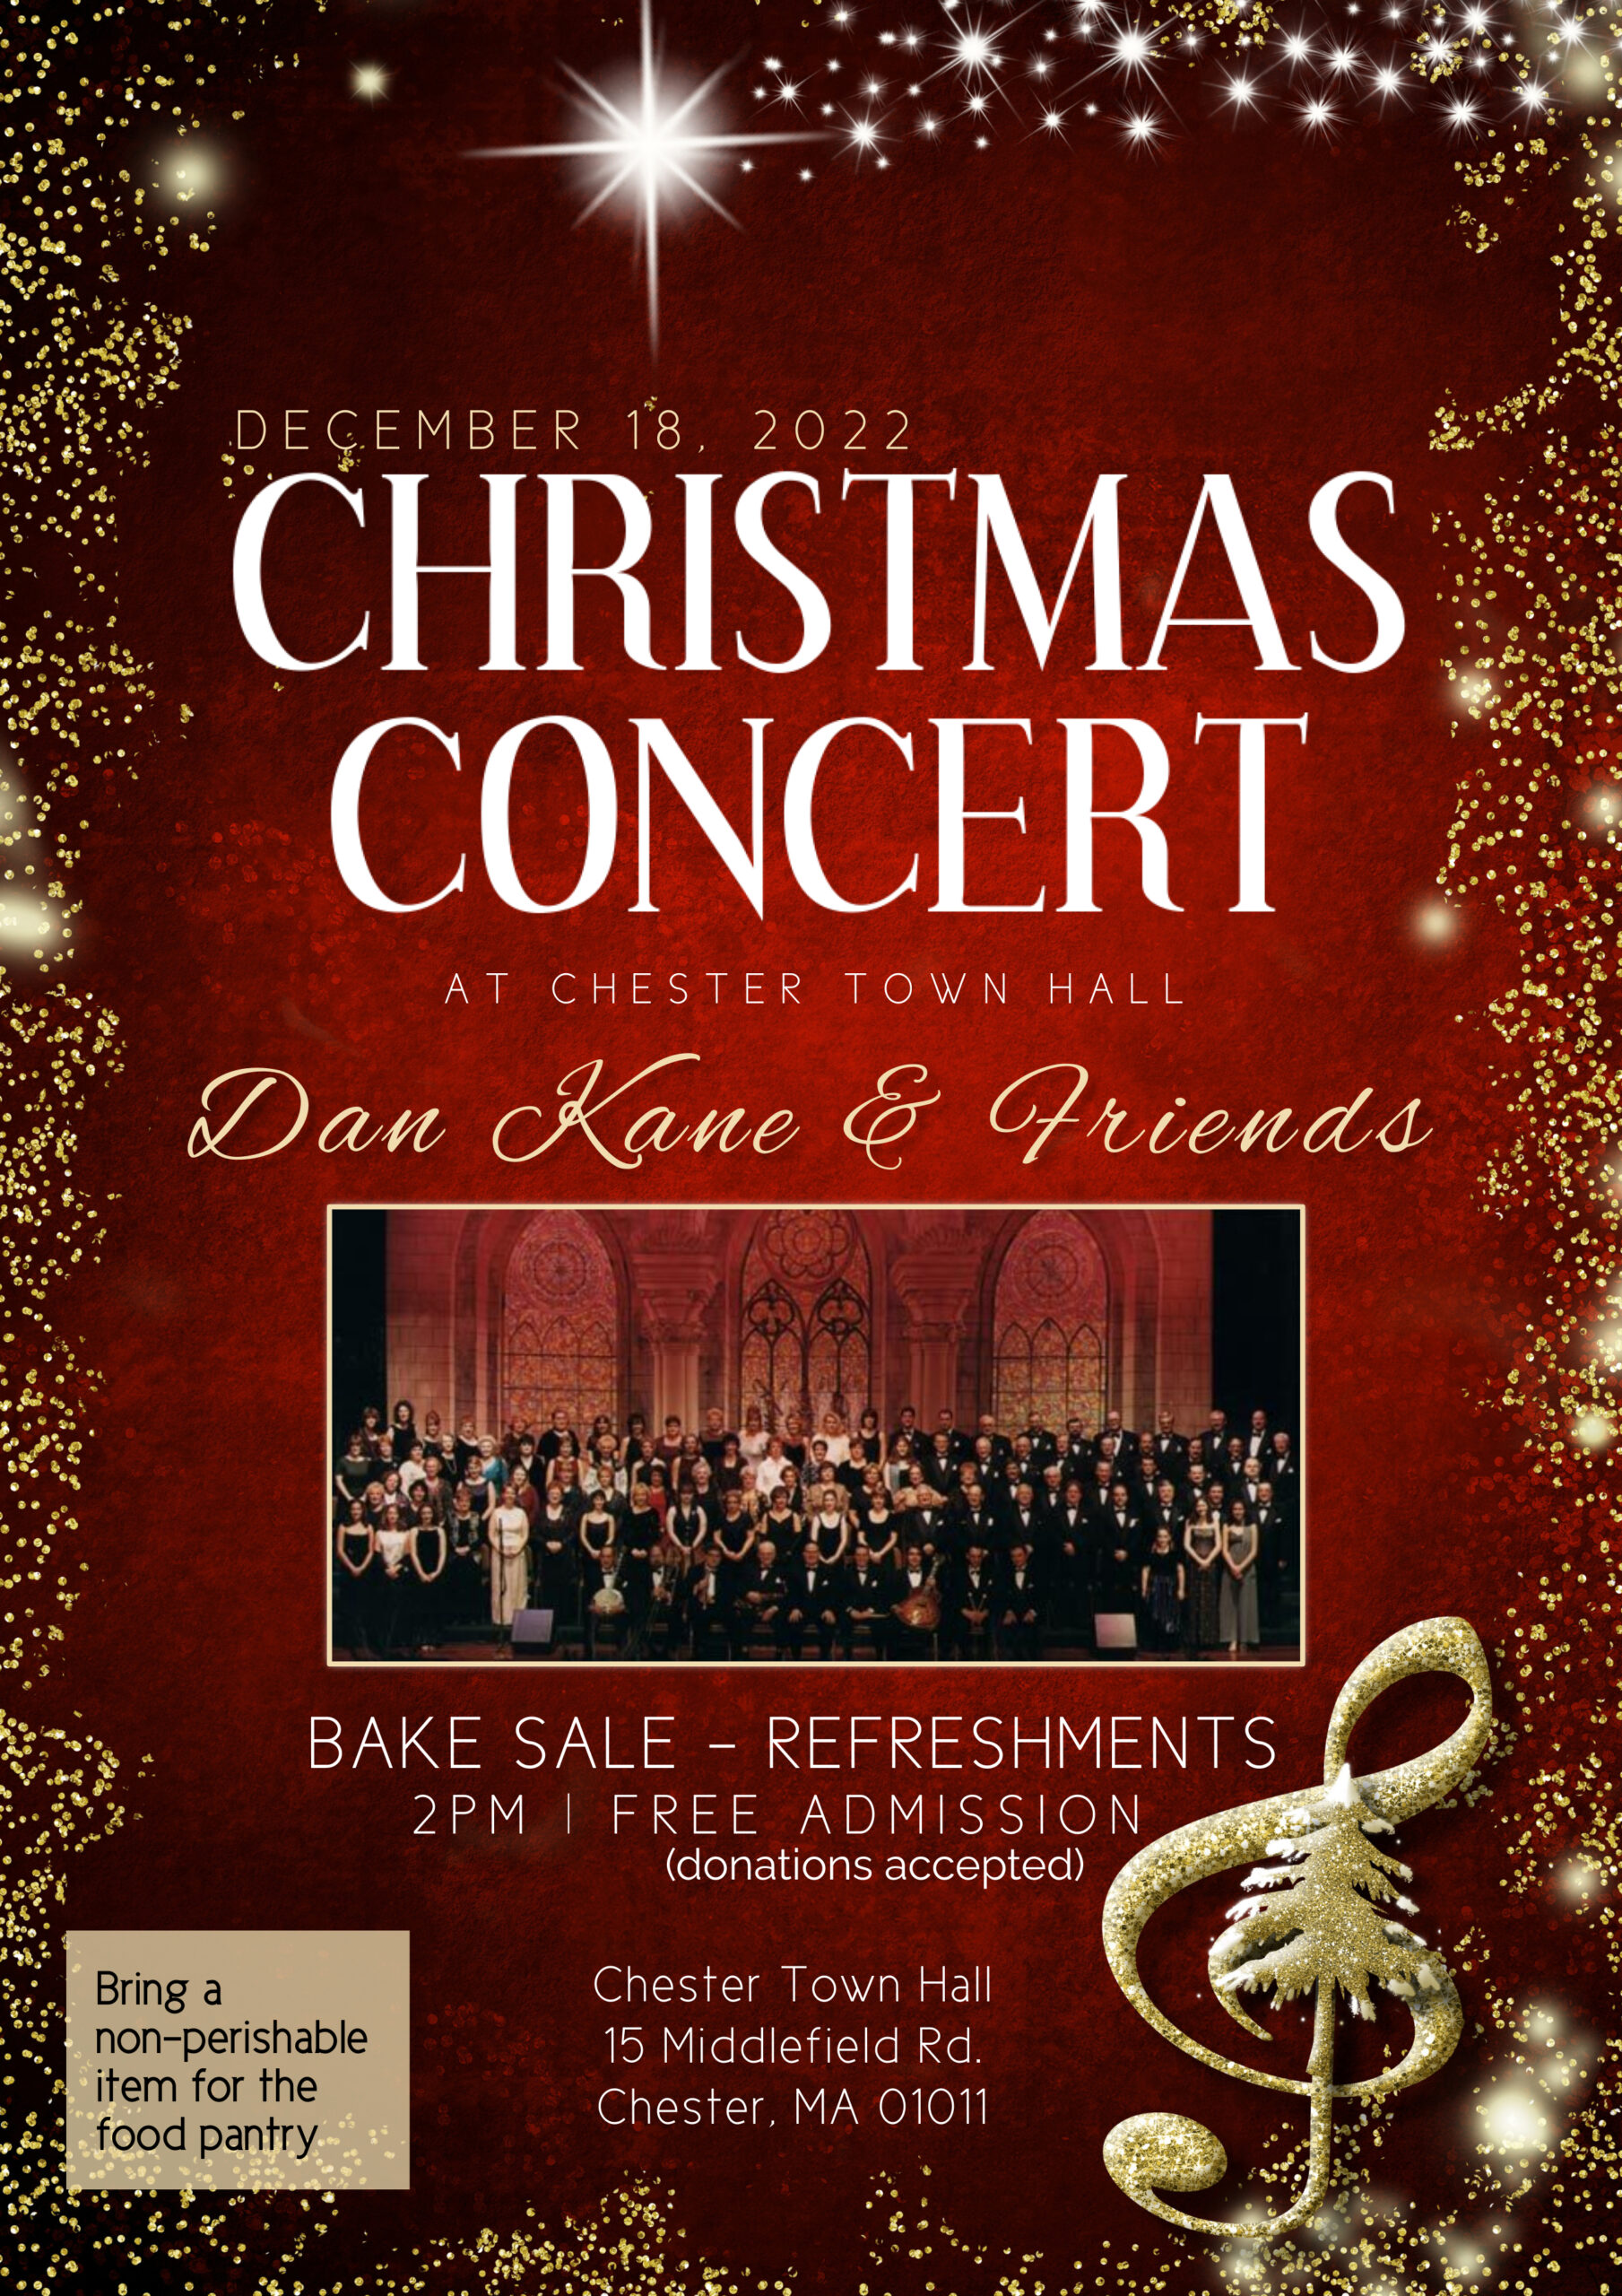 Dan Kane & Friends Christmas Concert